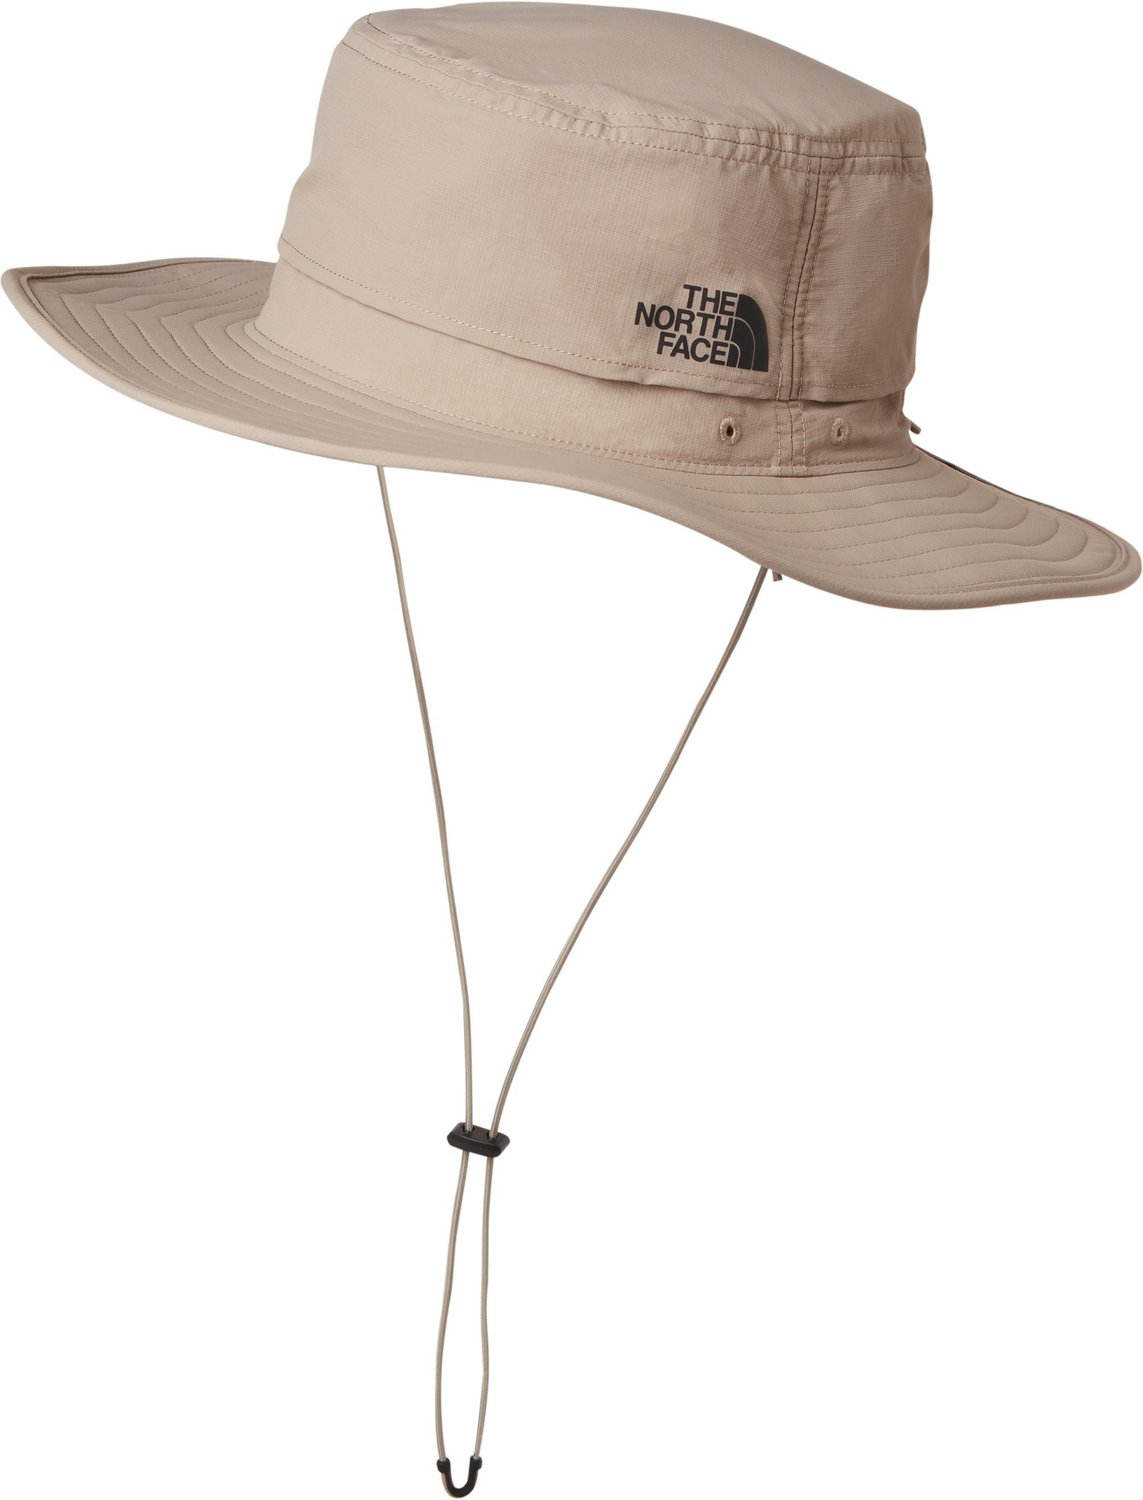 The North Face Men's Horizon Breeze Brimmer Hat | Academy